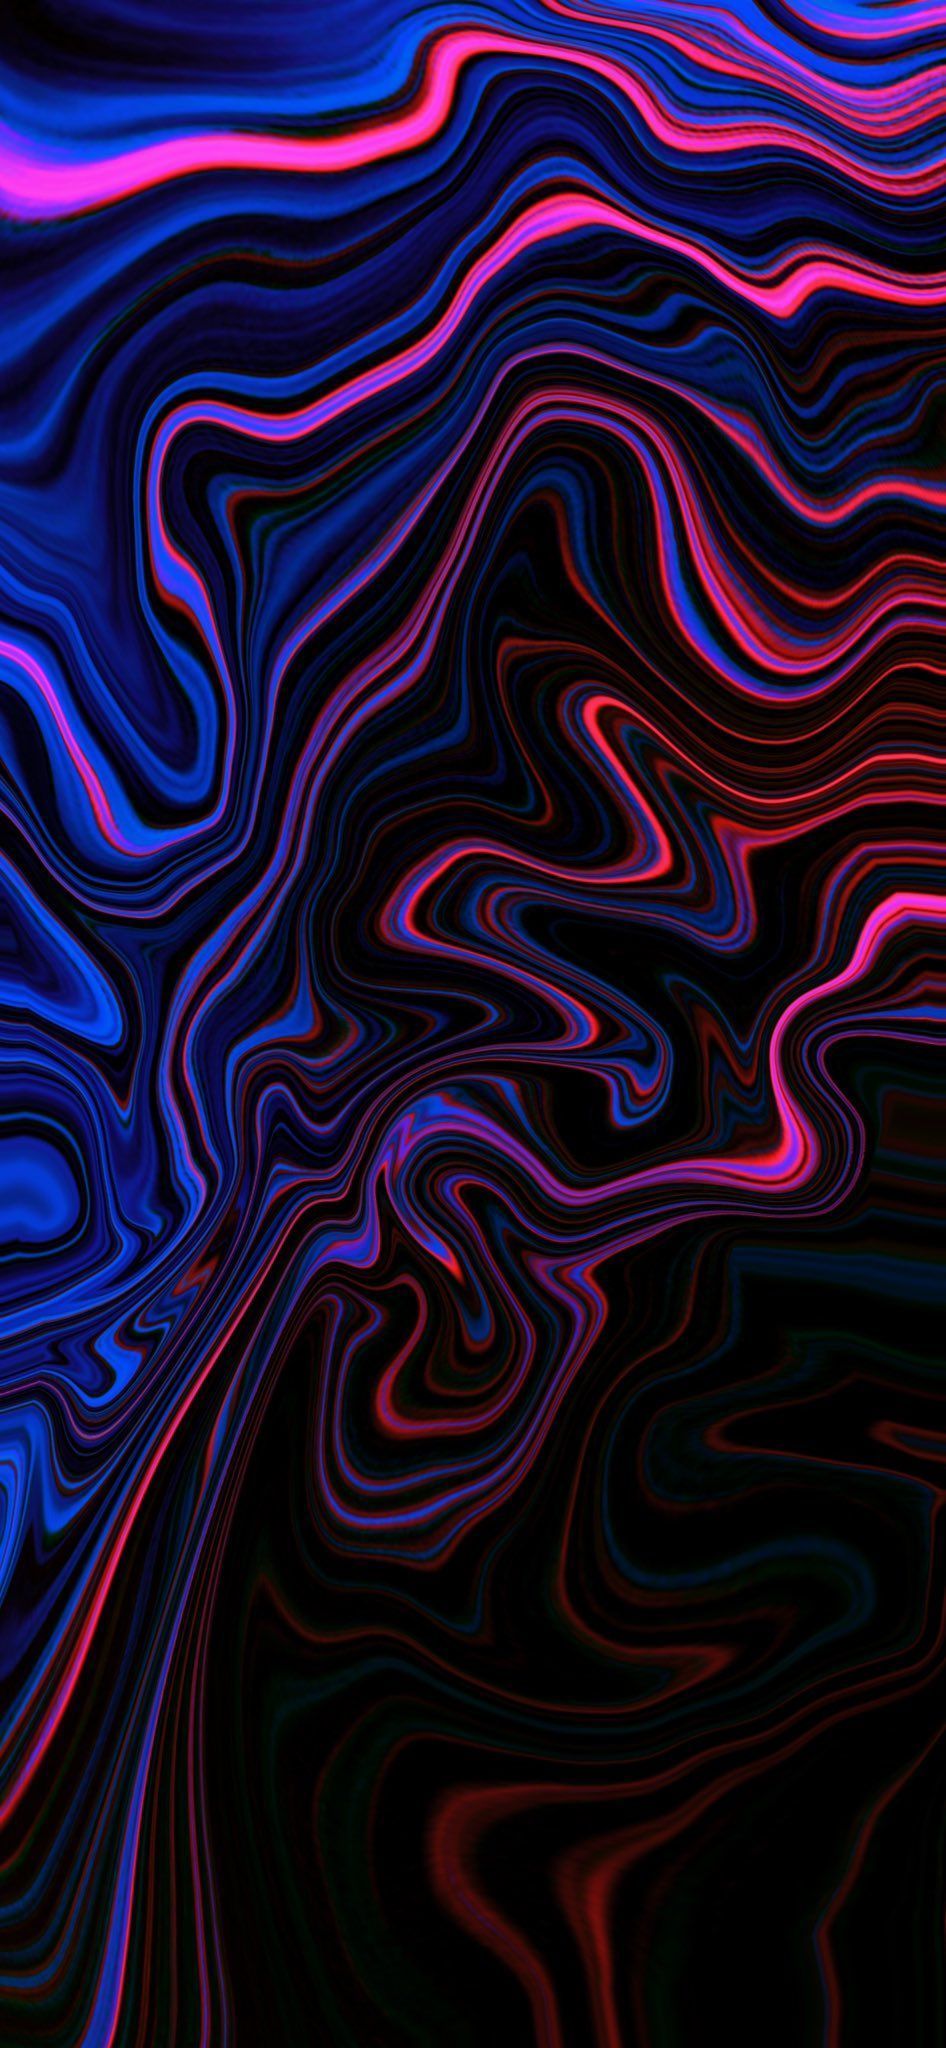 Neon Minimalist iPhone Wallpaper Free Neon Minimalist